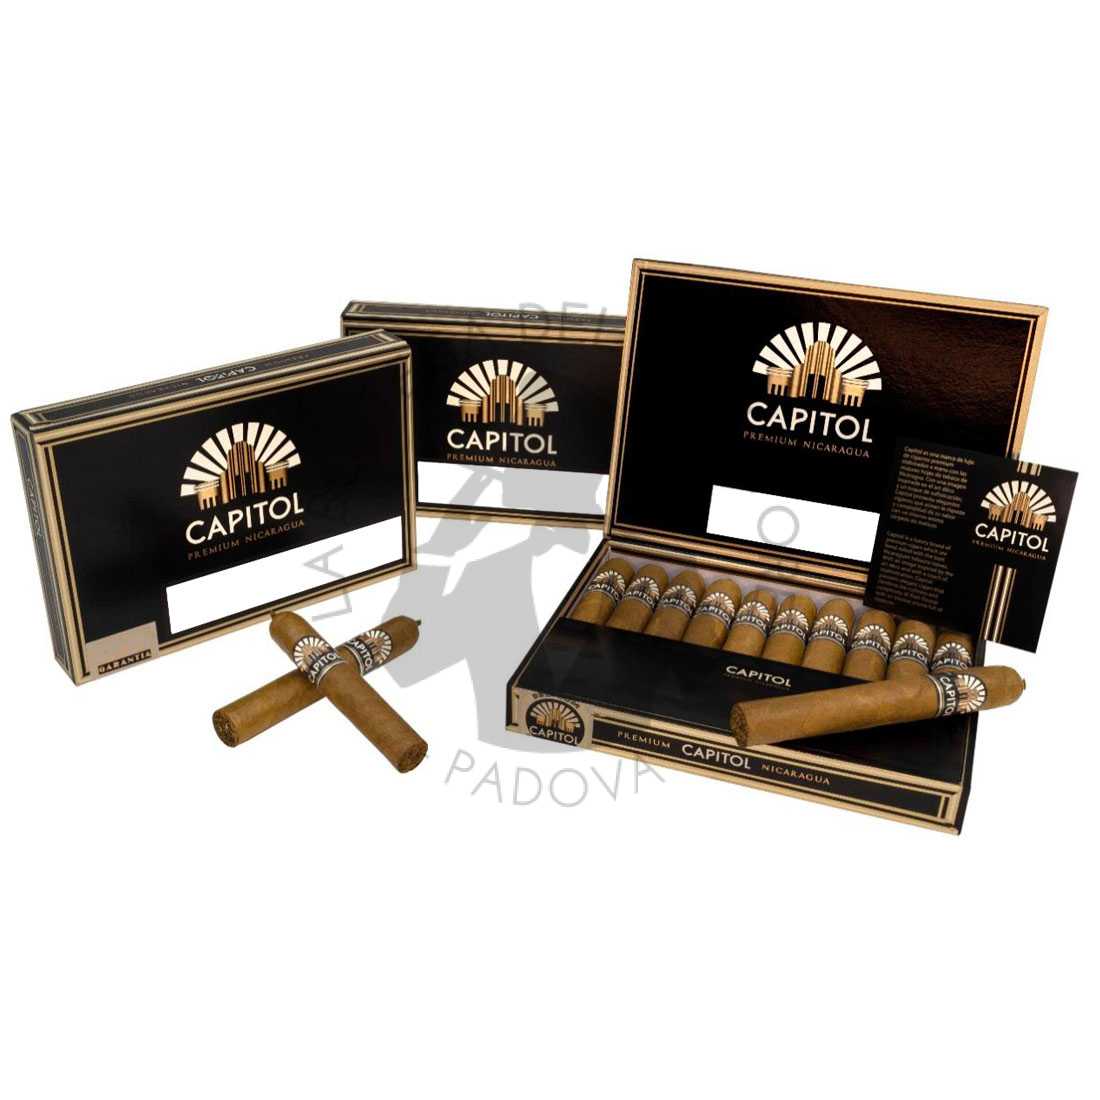 Capitol Cigars family